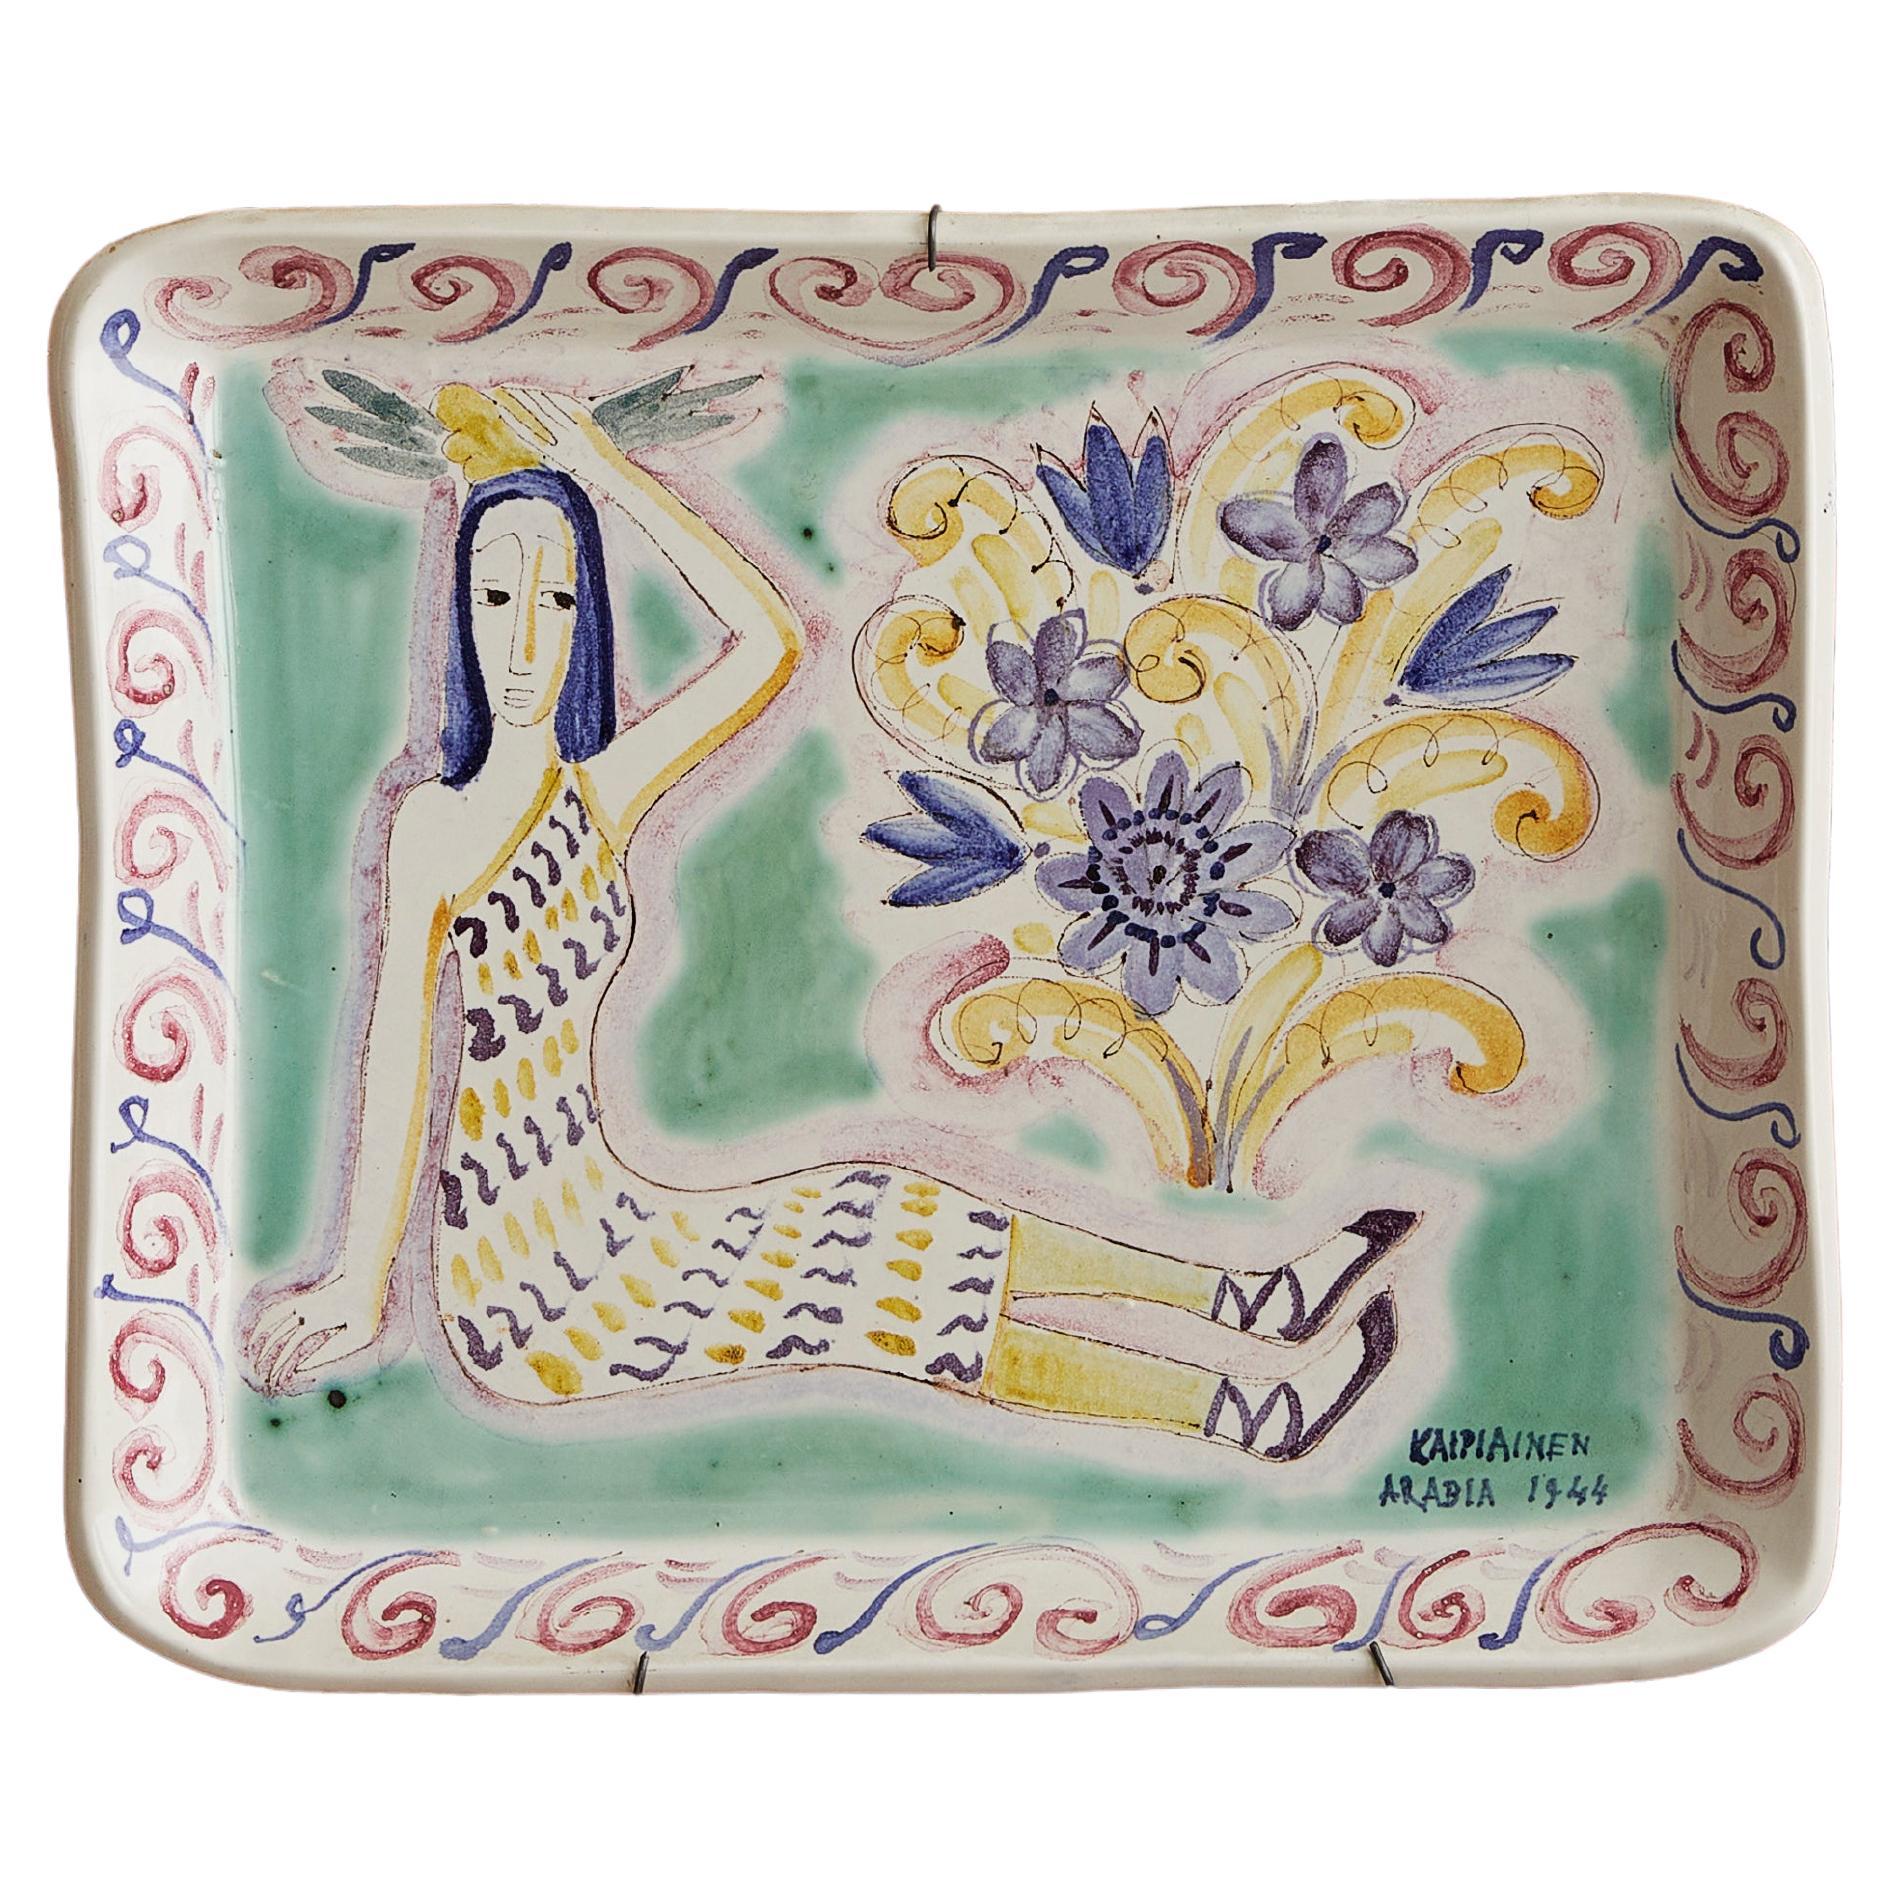 Vintage Birger Kaipiainen Ceramic Hanging Platter with Decoration, Finland, 1944